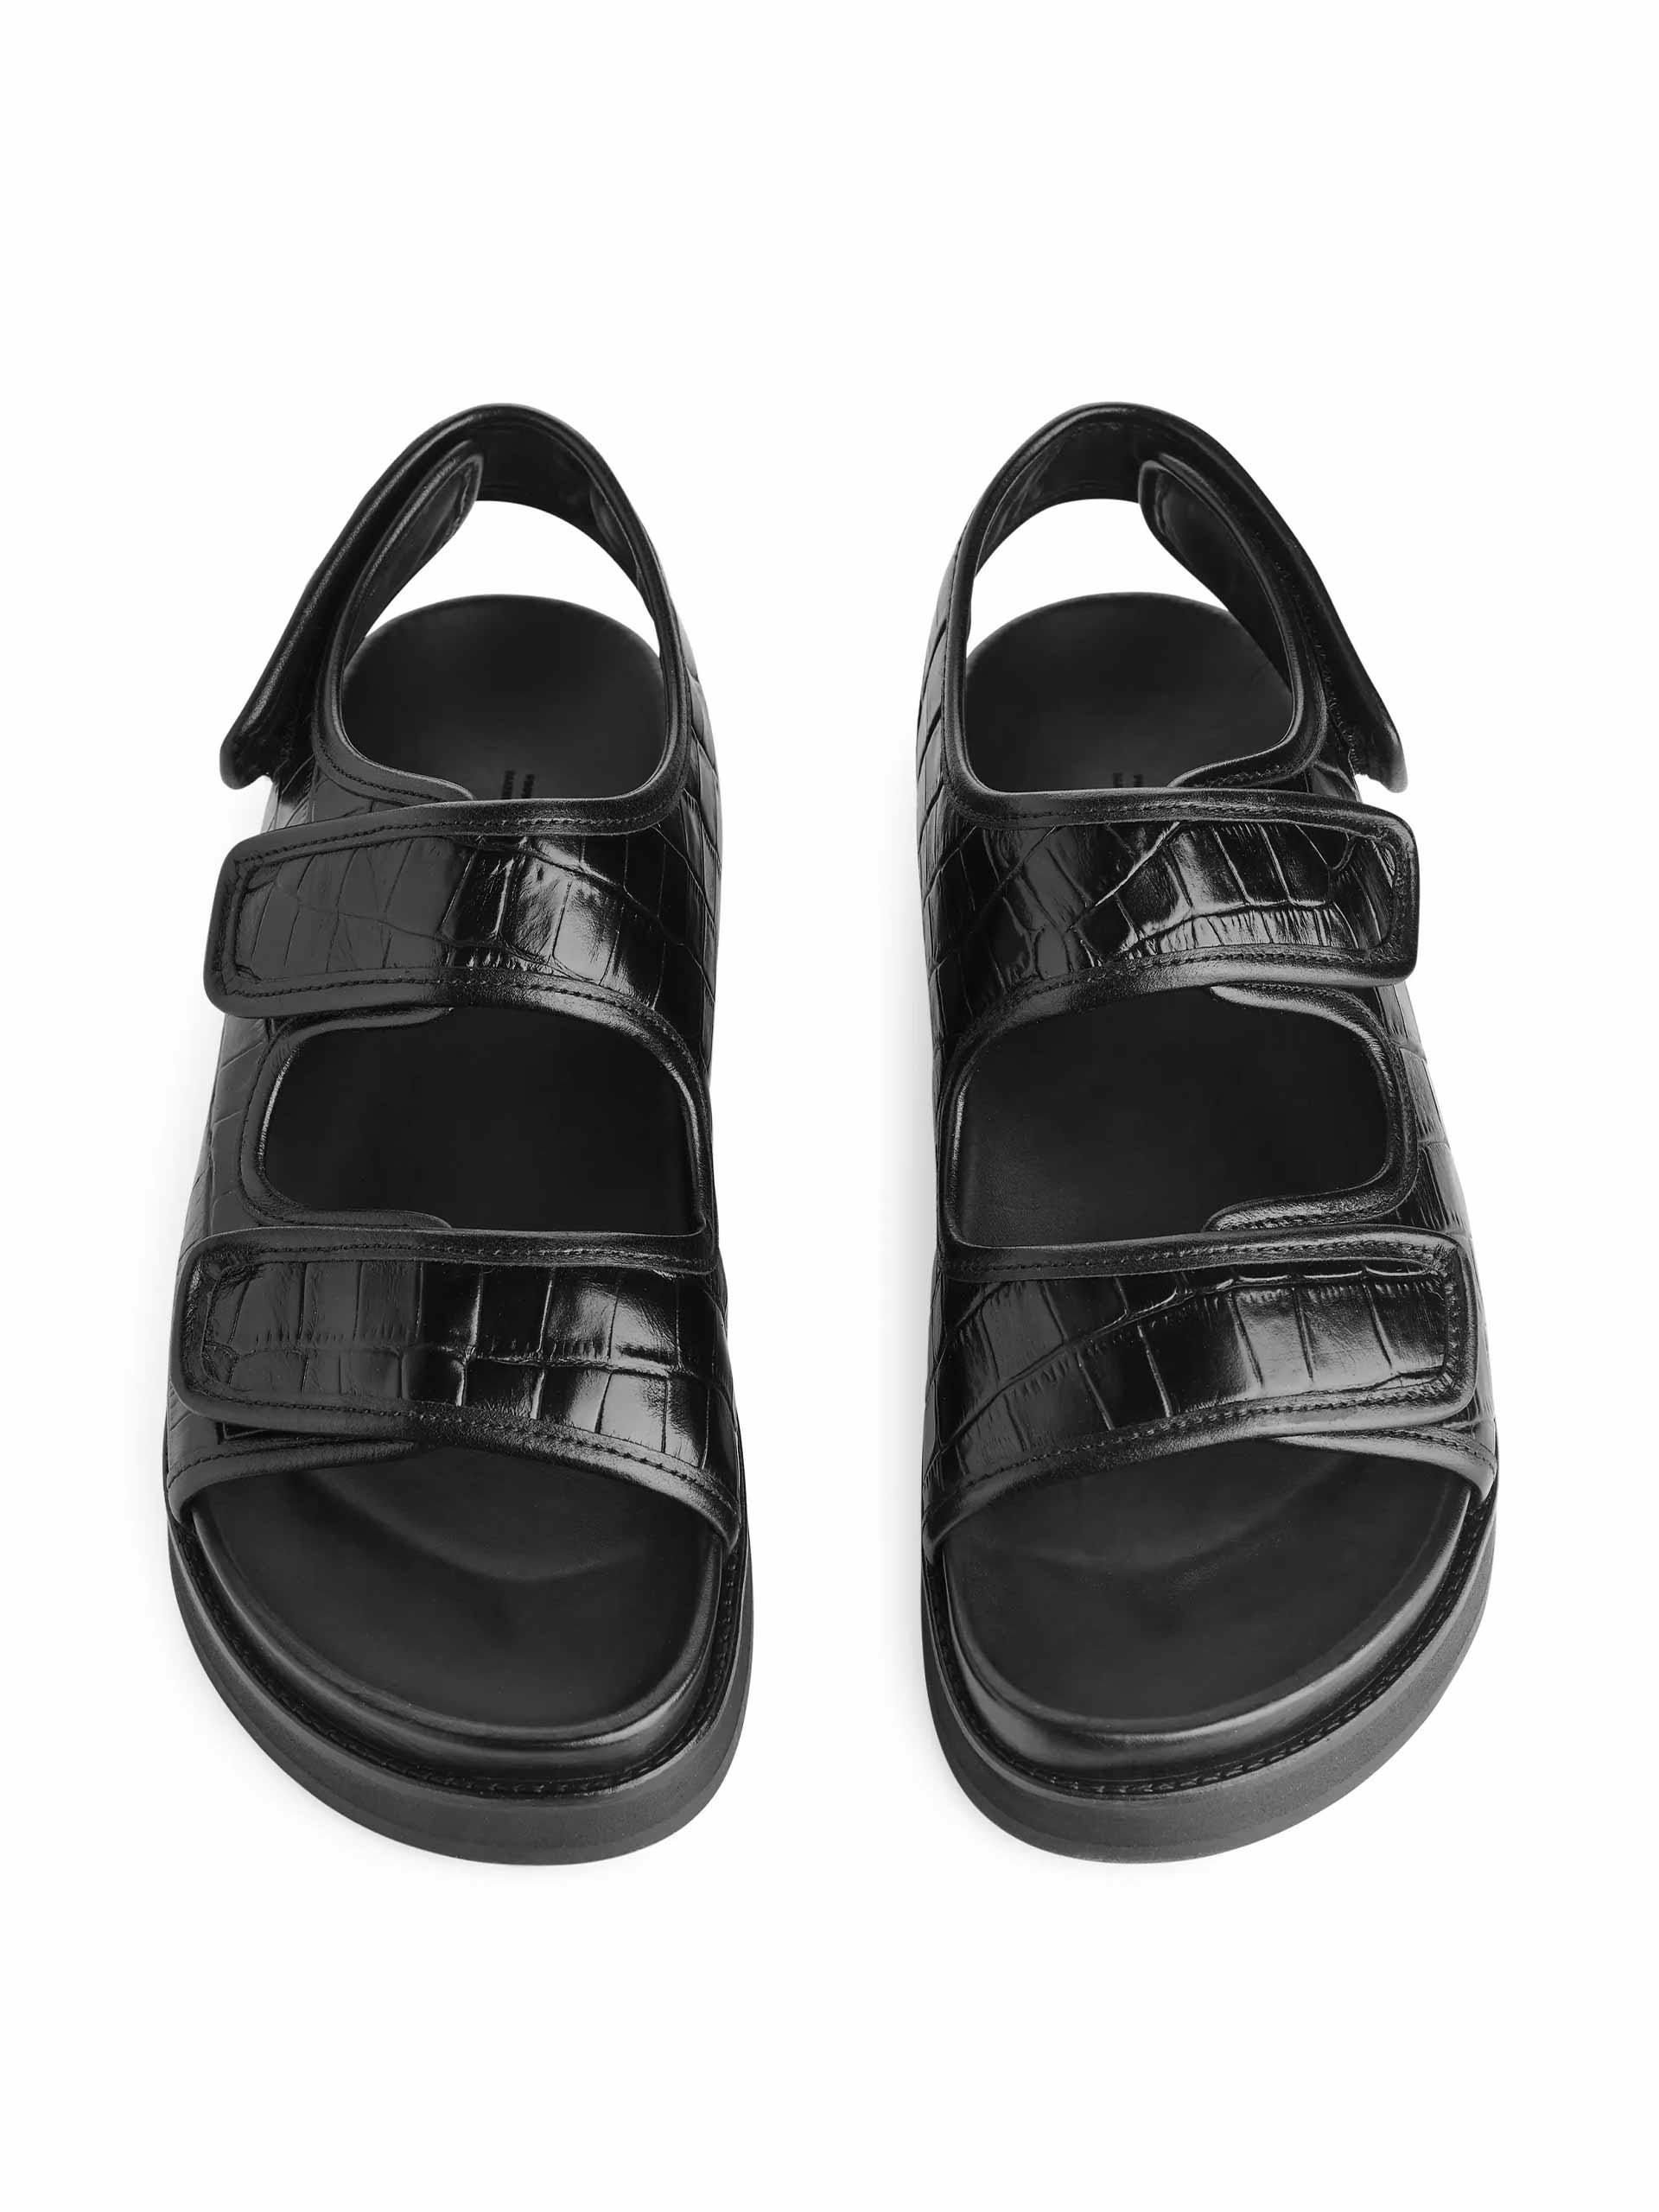 Black chunky crocodile leather sandals